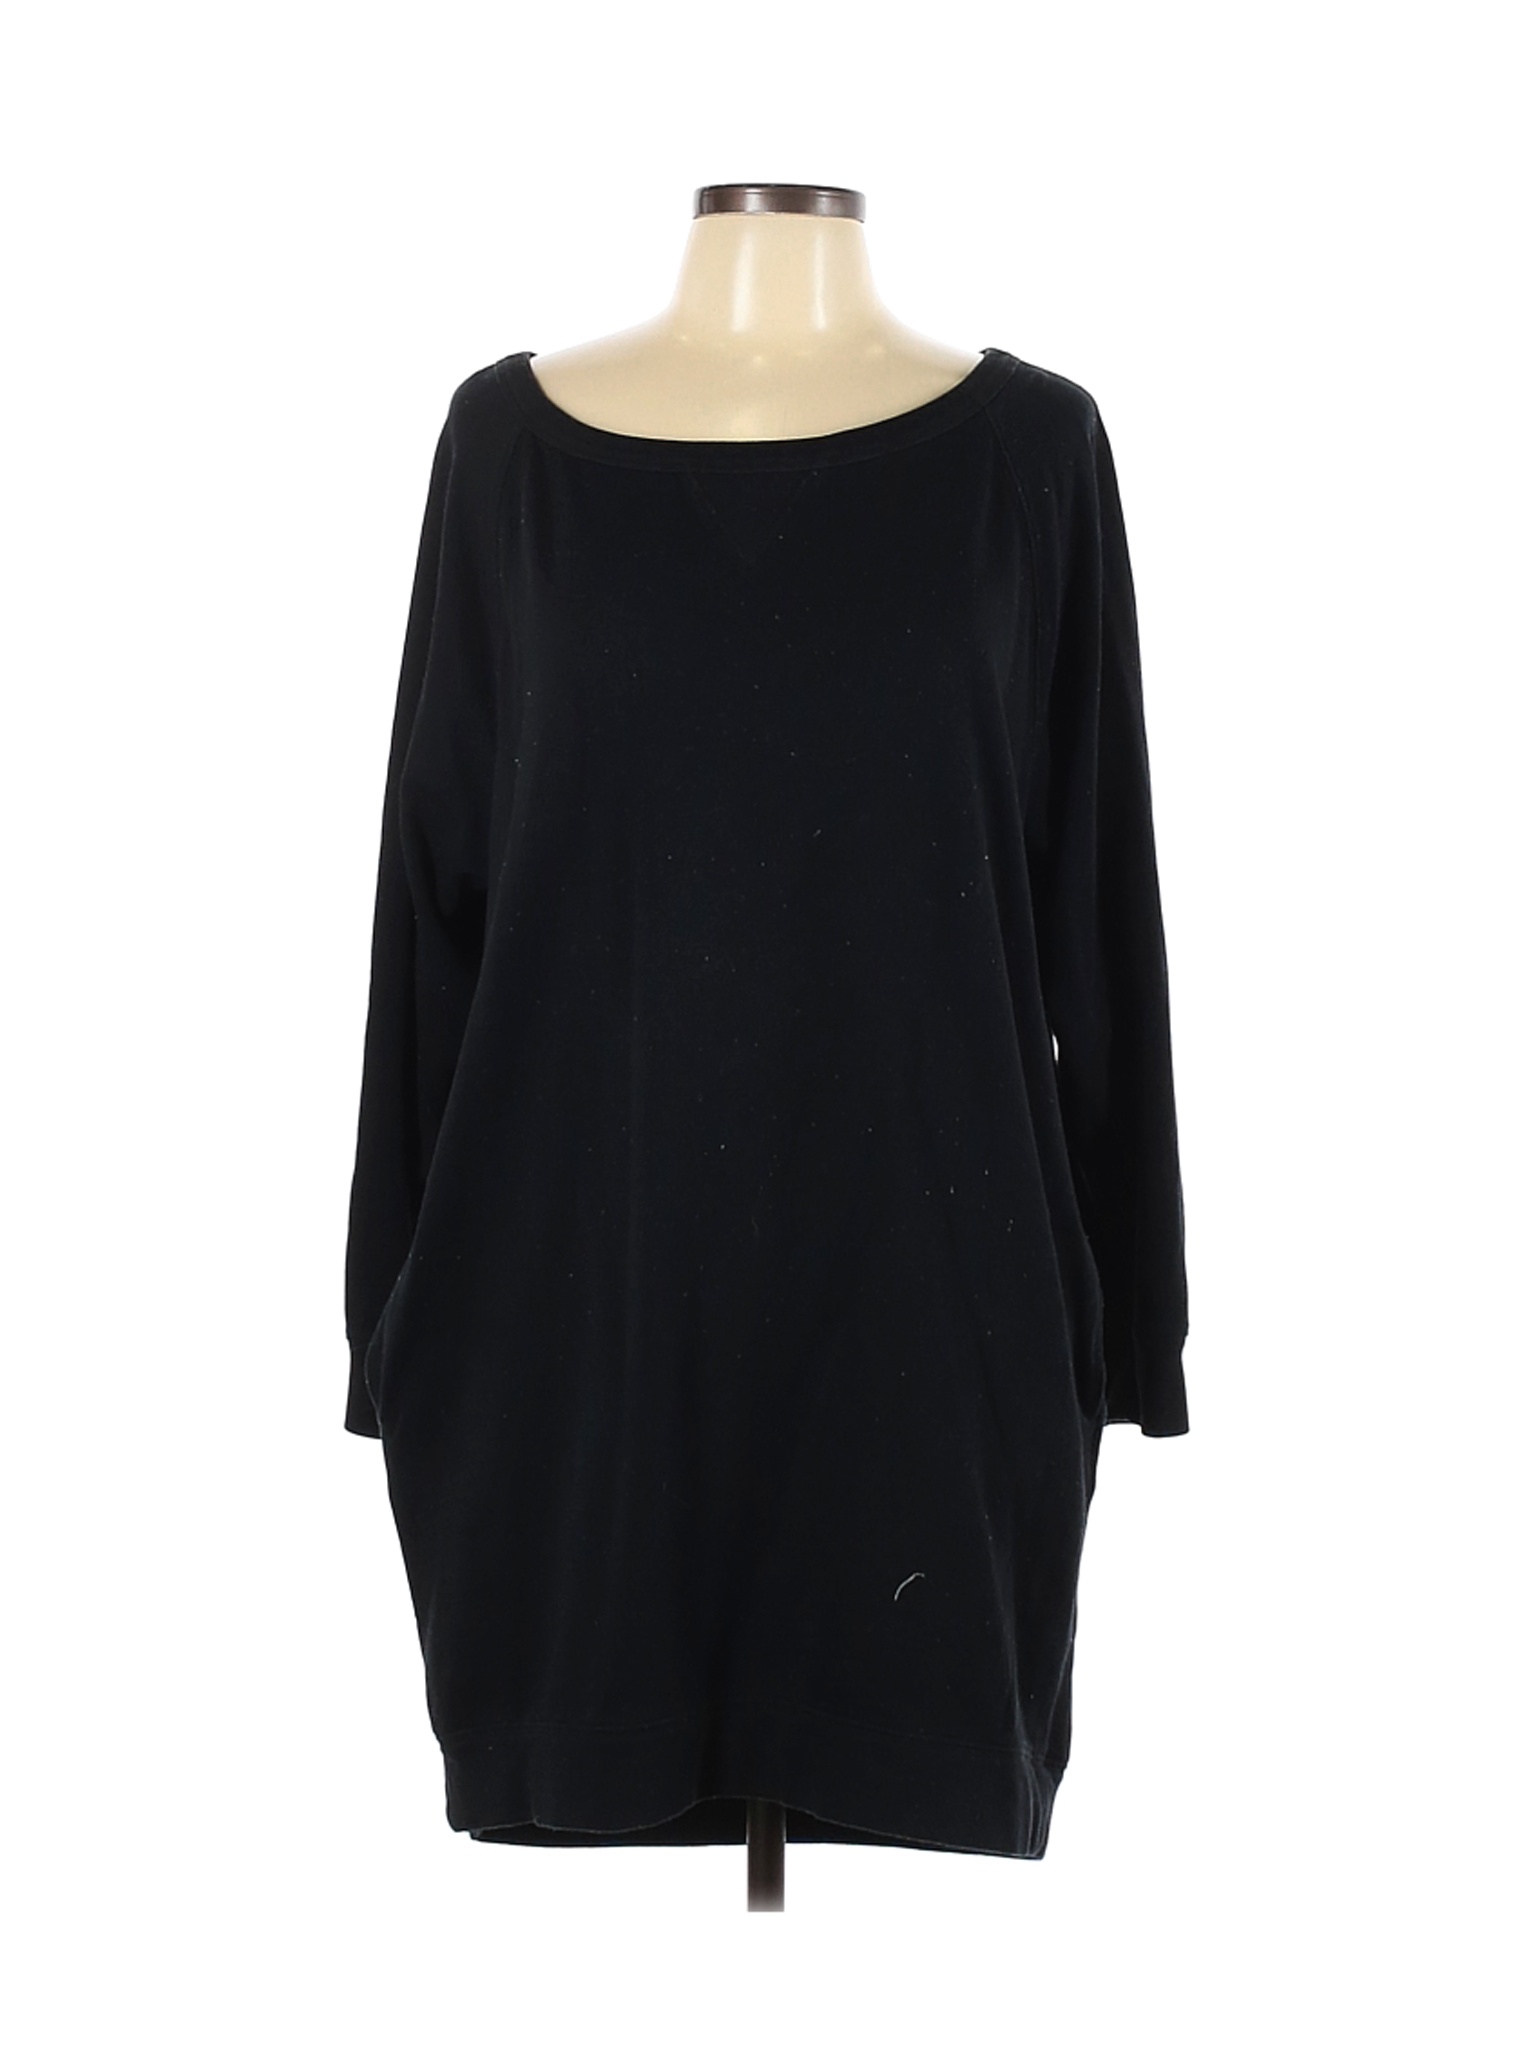 Gap Women Black Casual Dress L | eBay